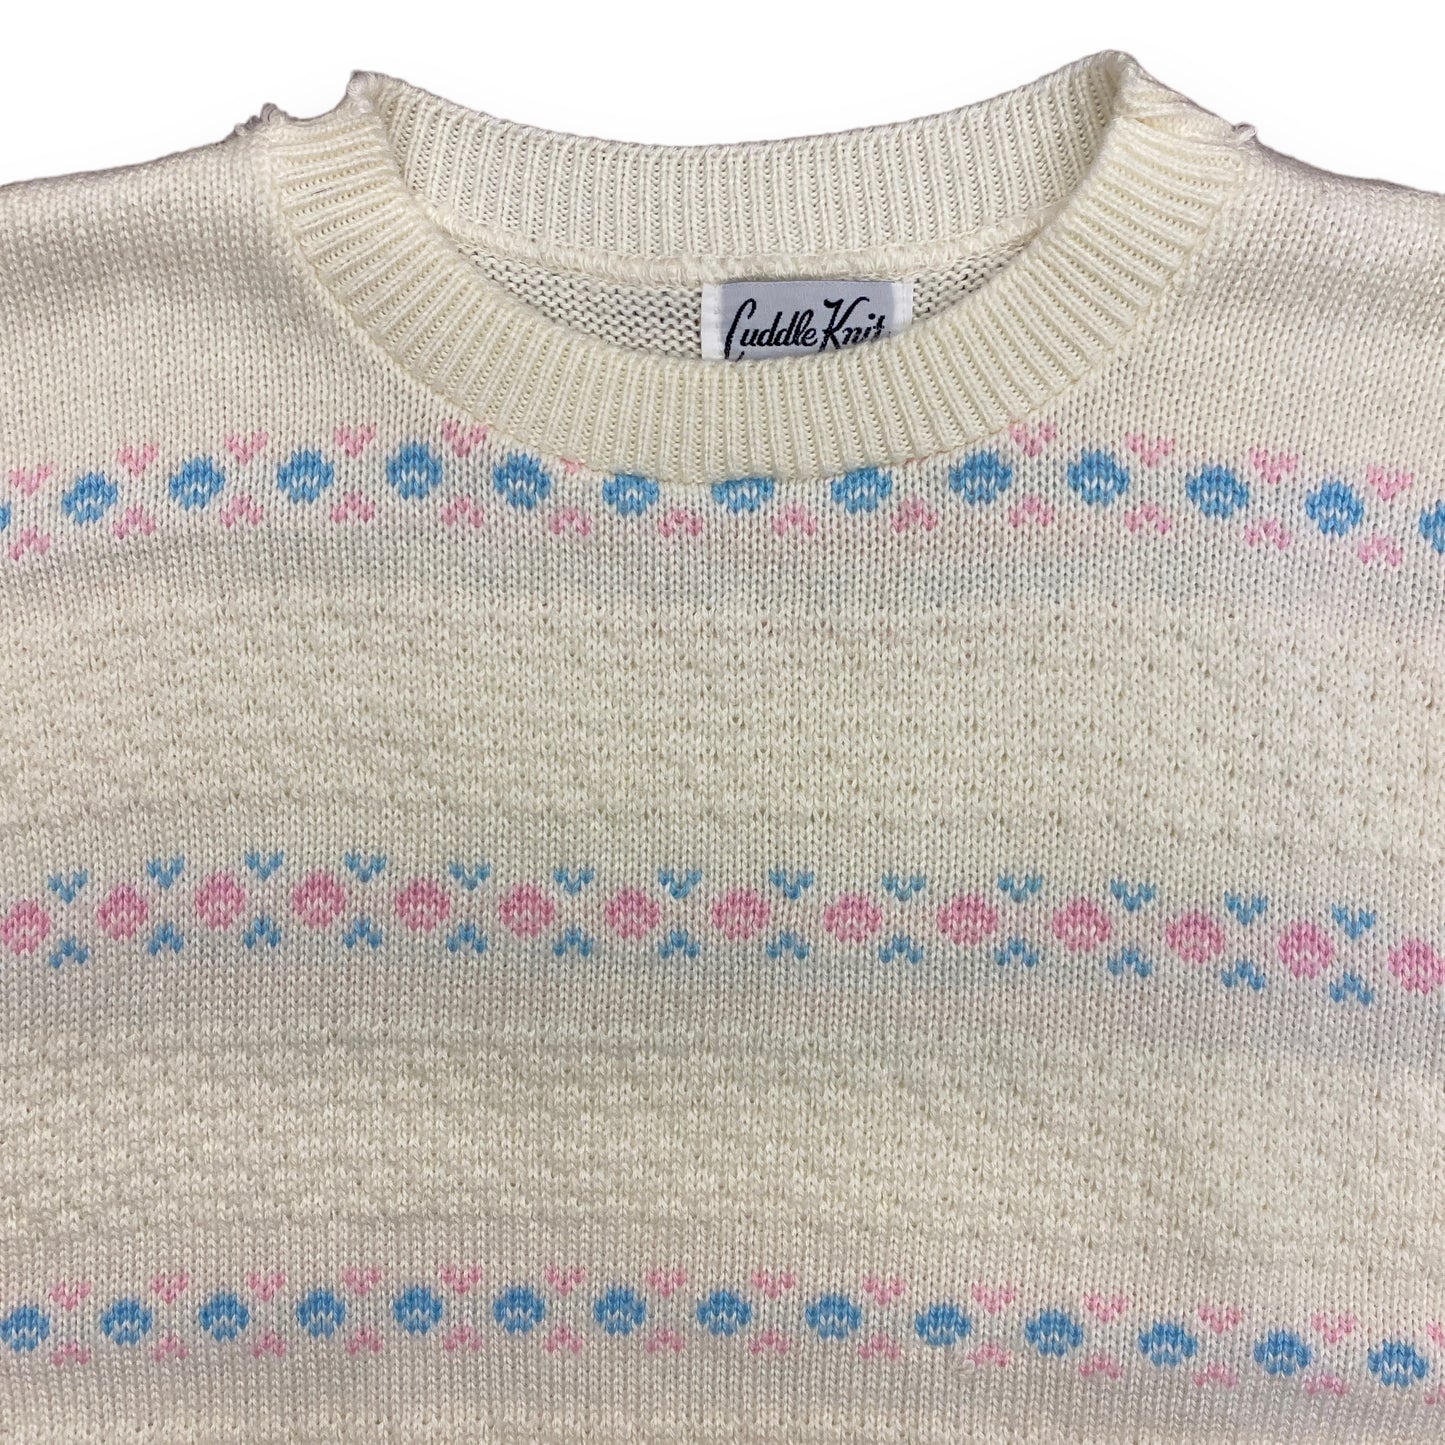 1980s Cuddle Knit Short Sleeve Sweater - Size Medium